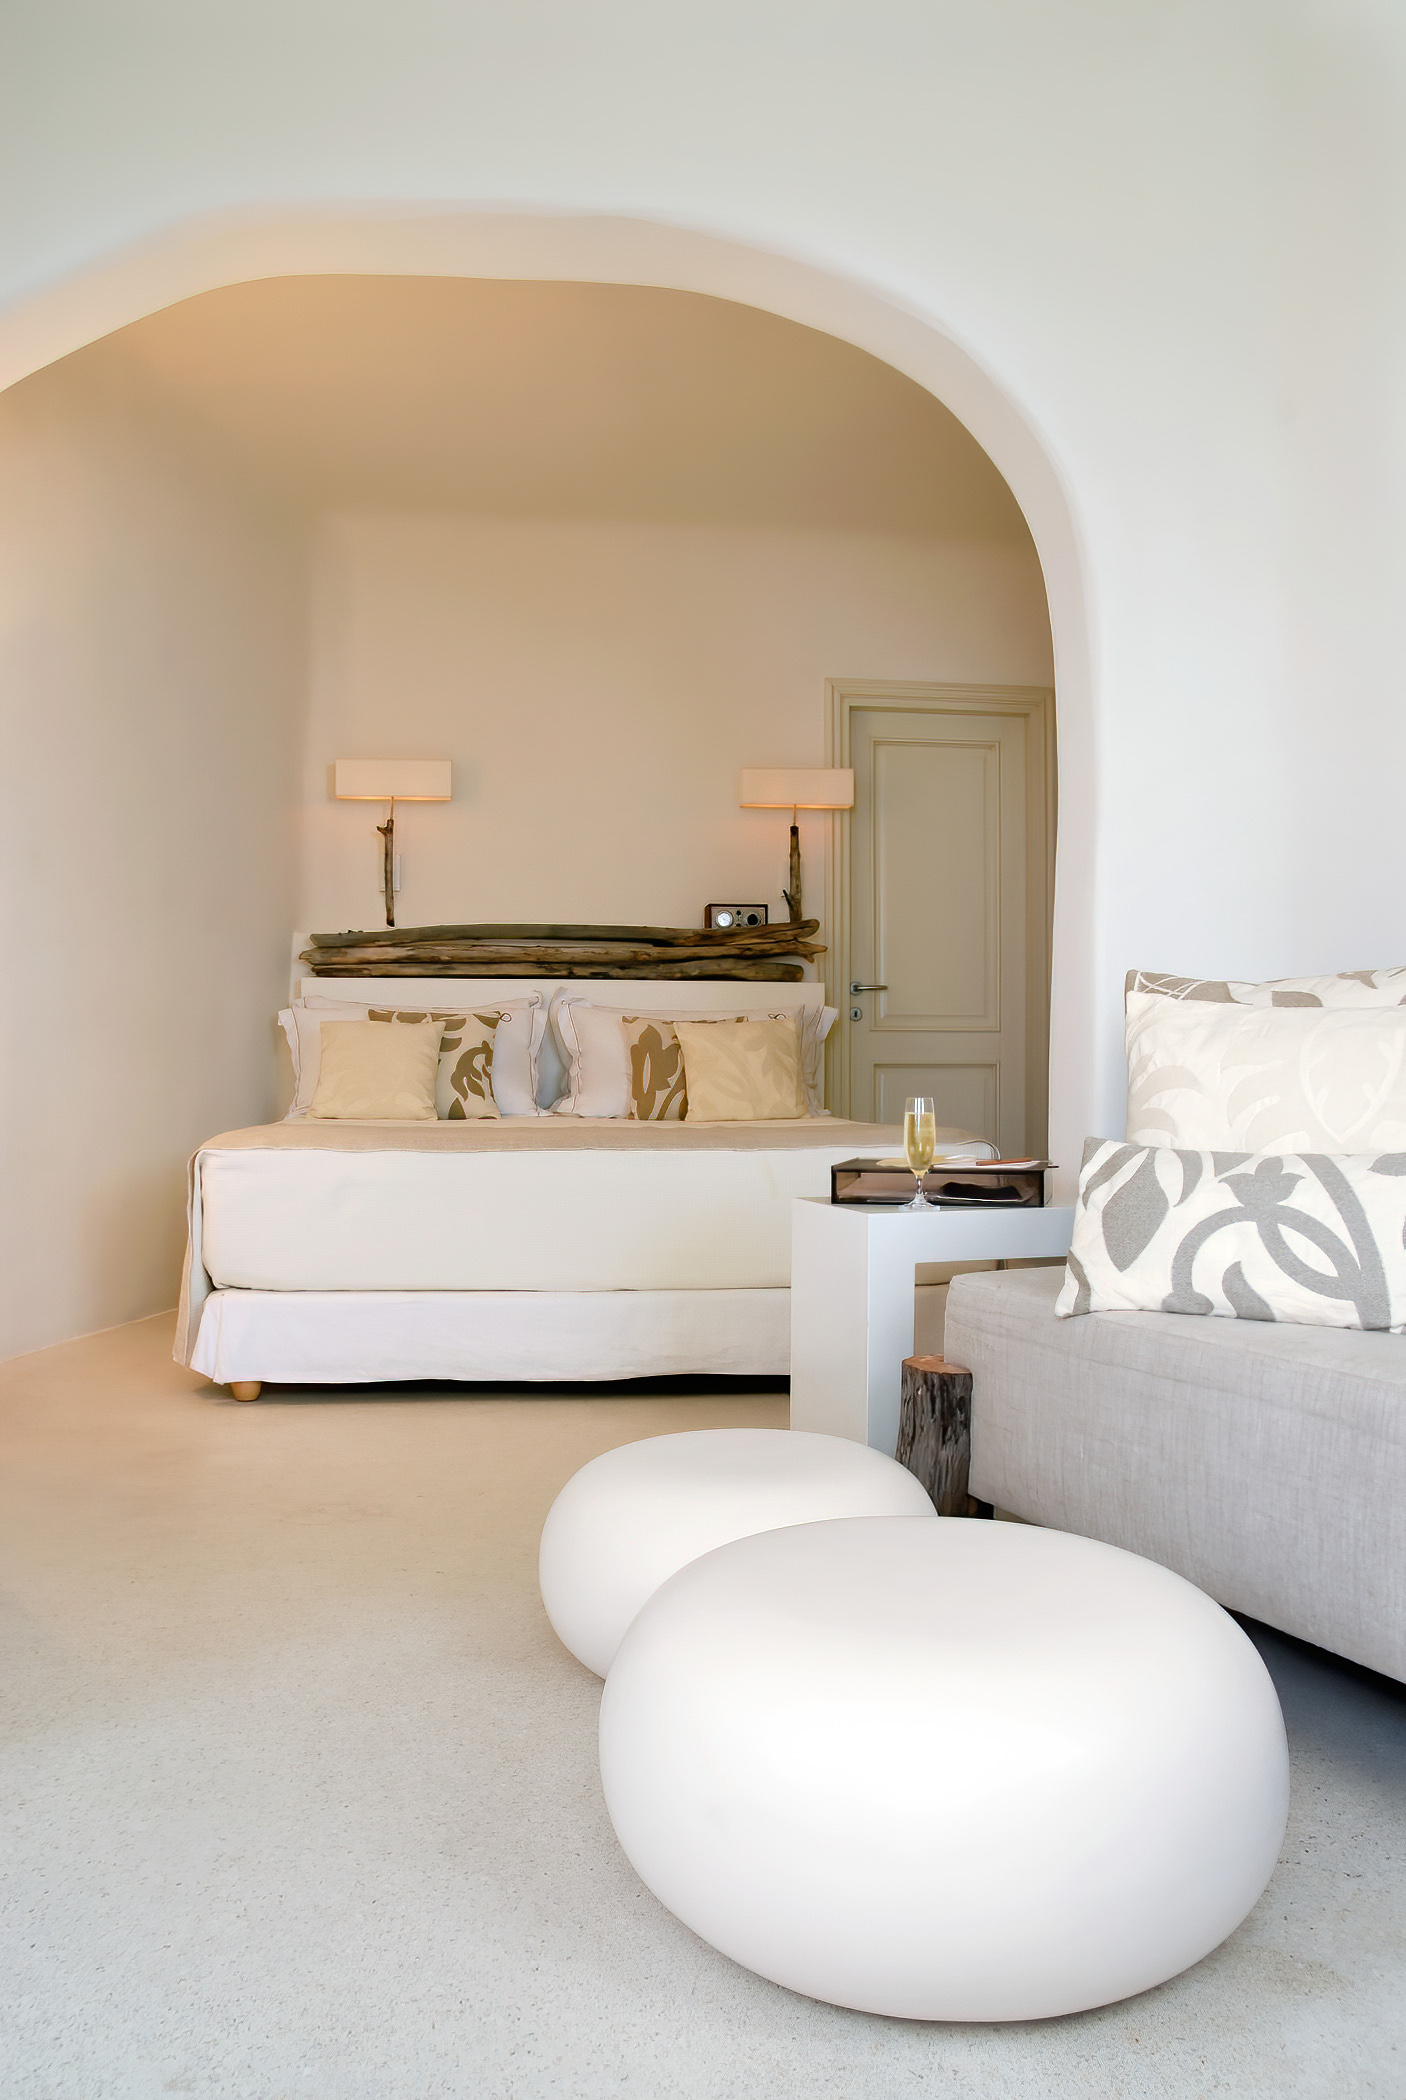 Mystique Hotel Santorini – Oia, Santorini Island, Greece - Bedroom